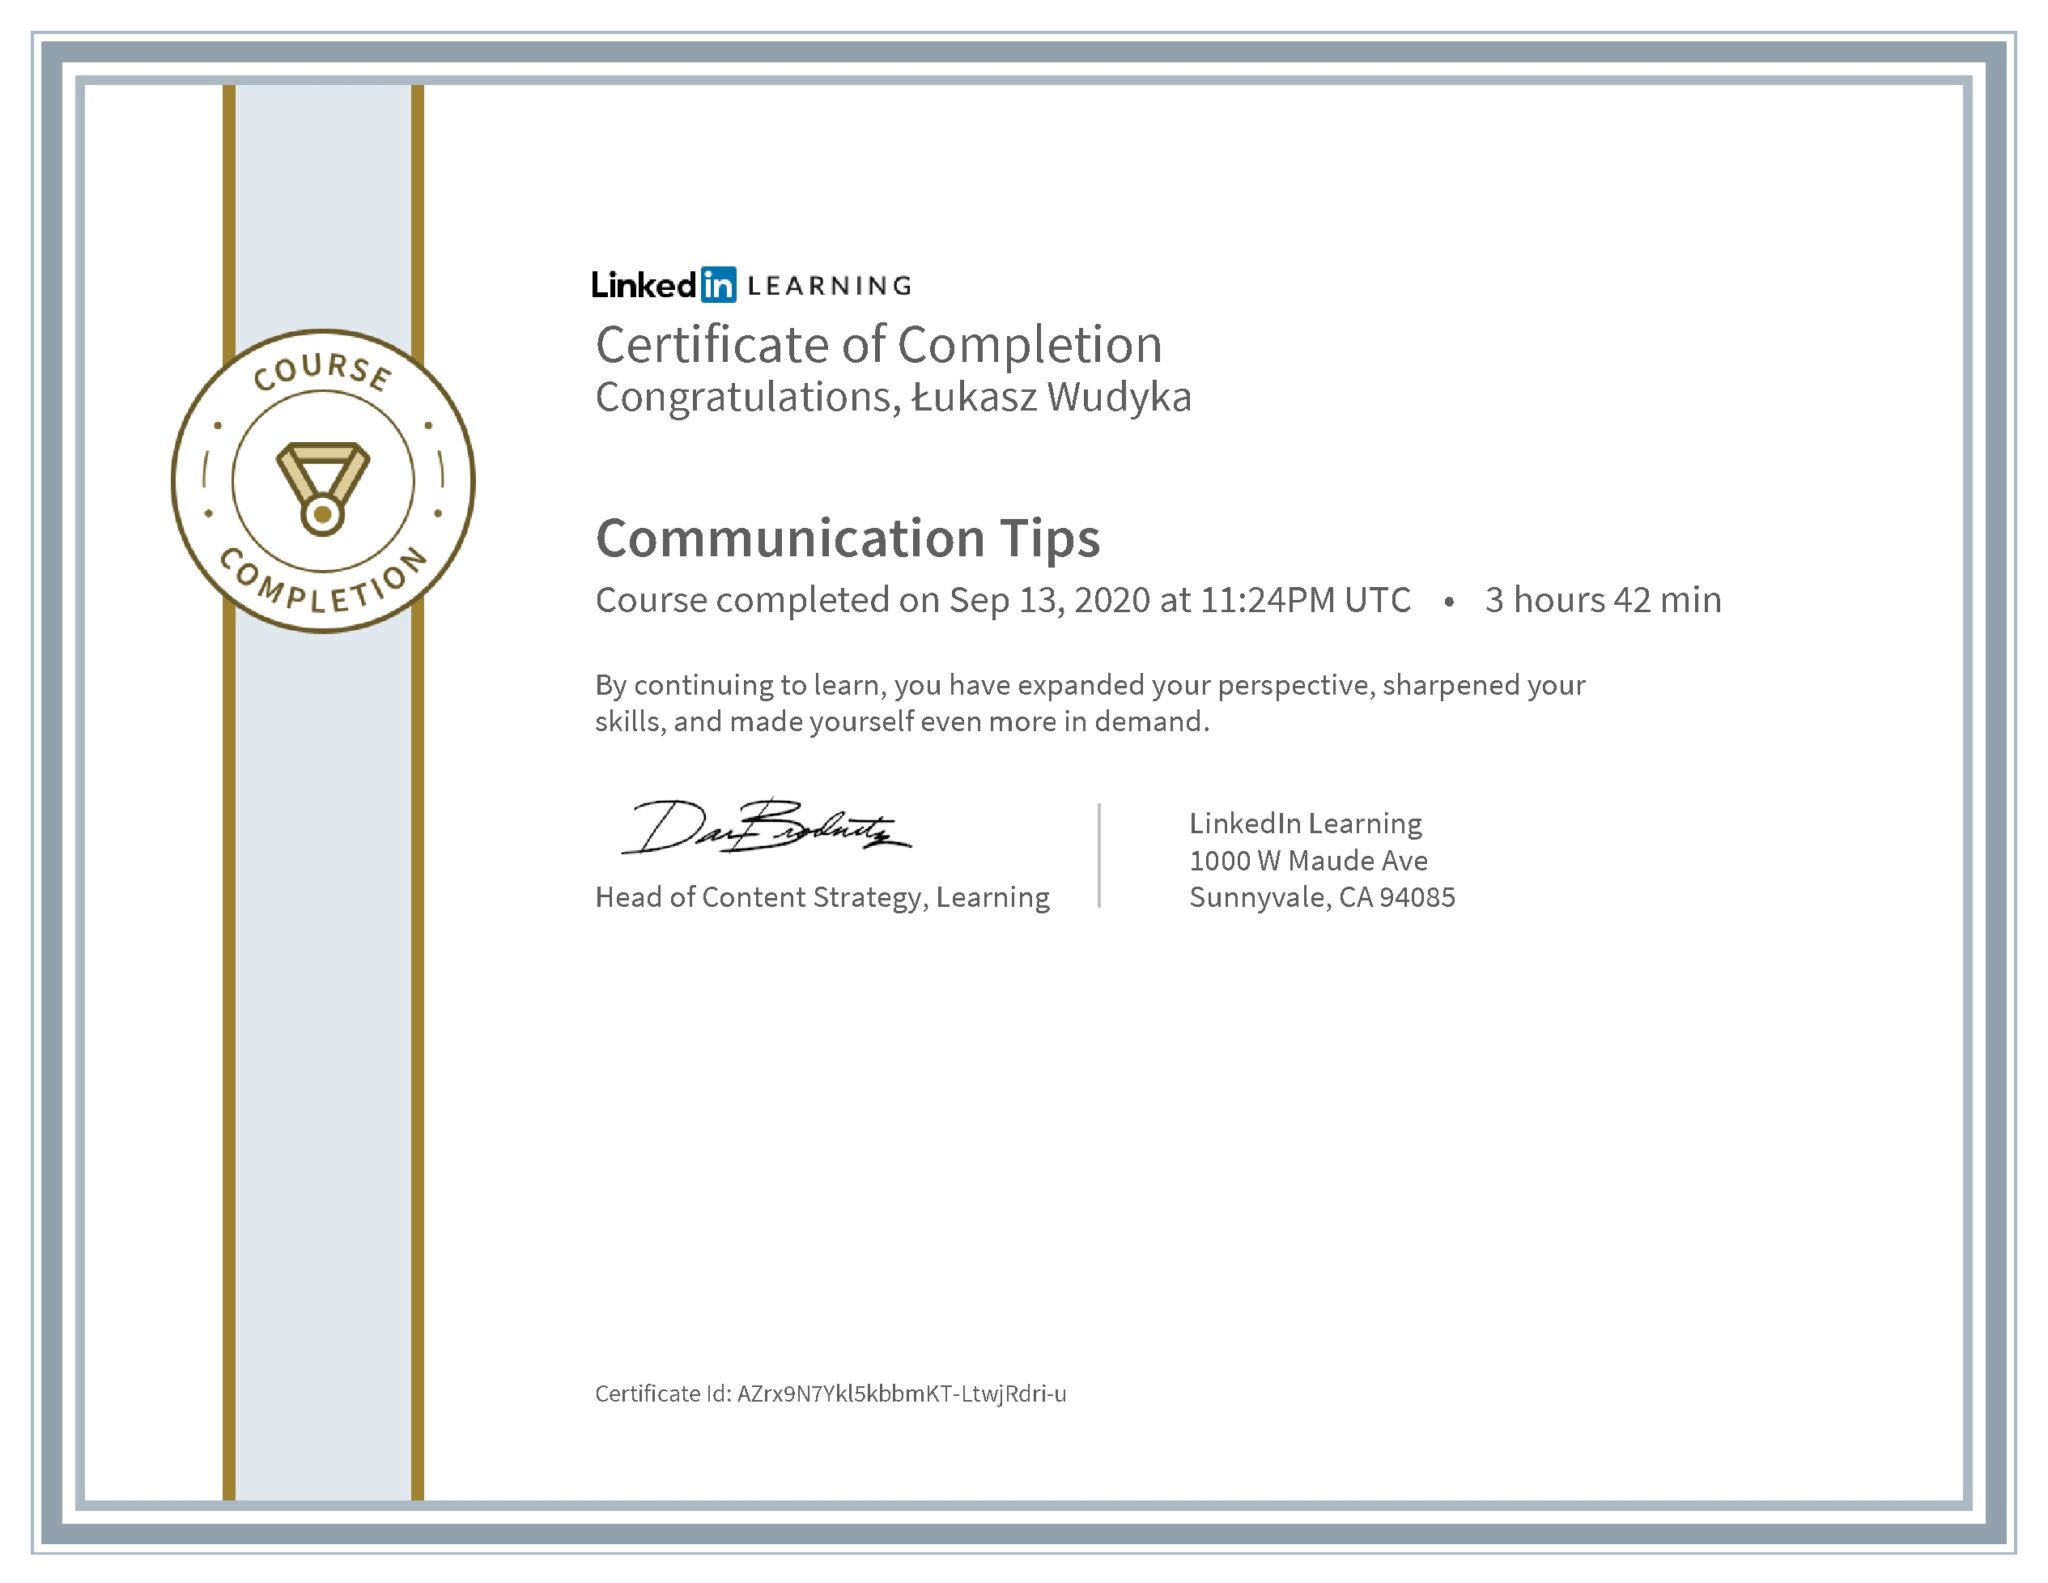 Łukasz Wudyka certyfikat LinkedIn Communication Tips